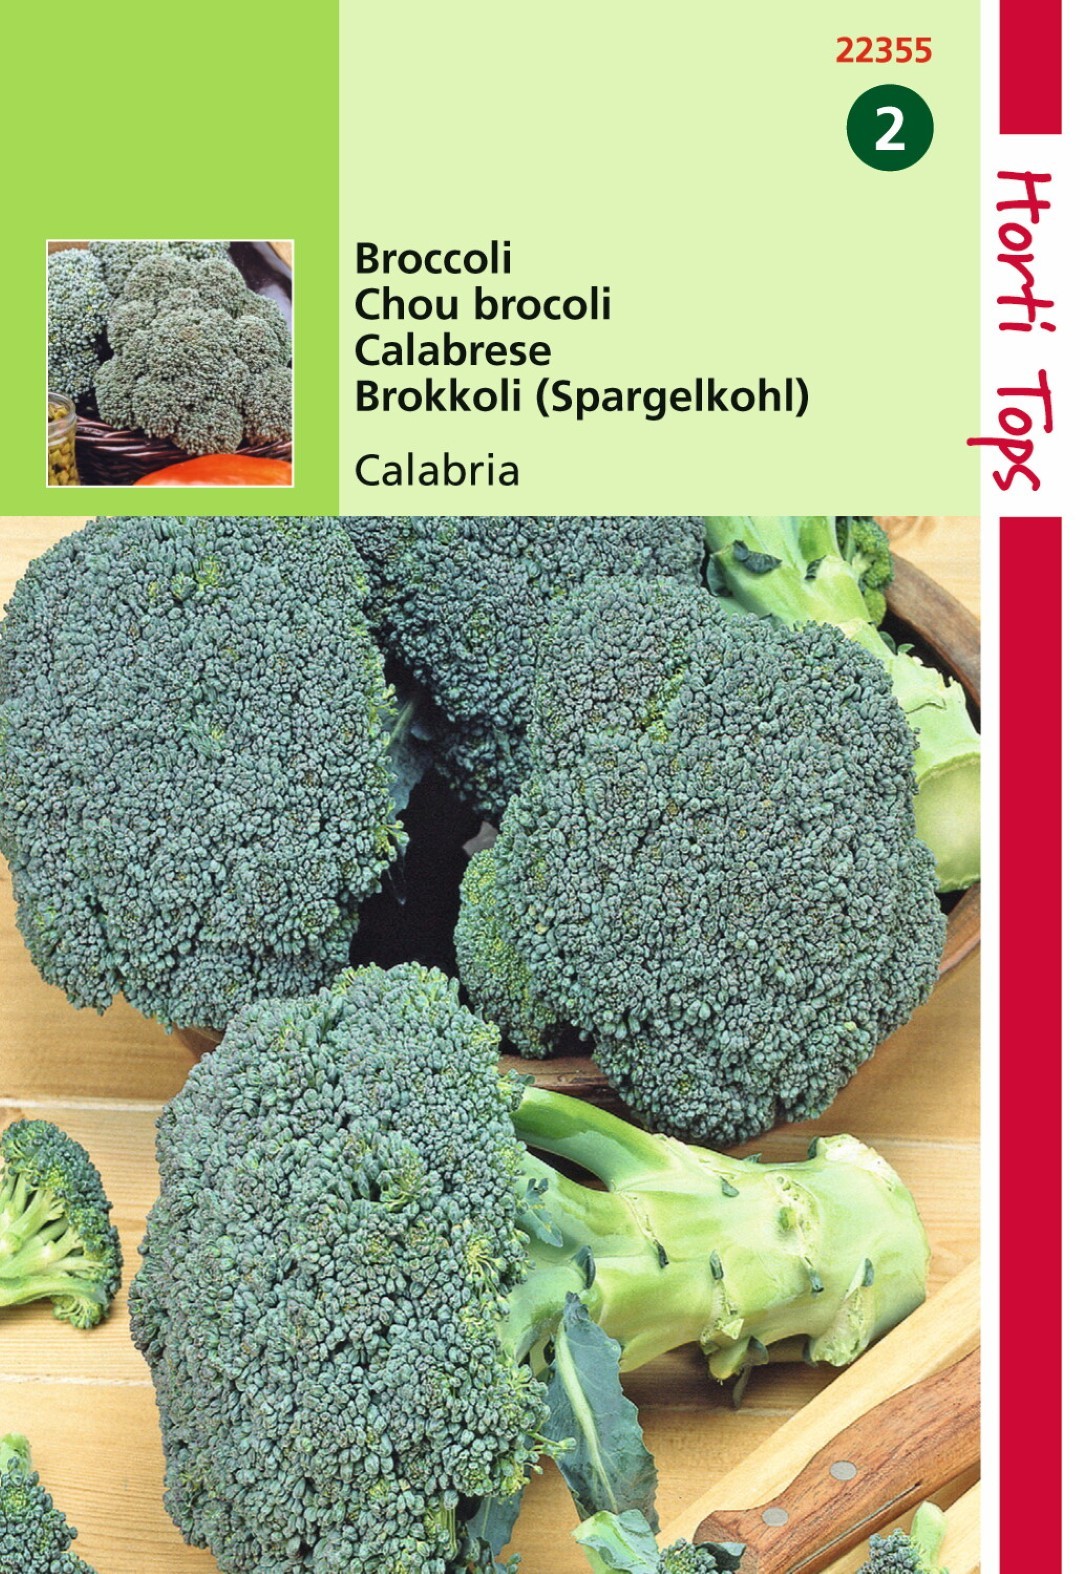 https://www.warentuin.nl/media/catalog/product/1/7/1778711117223559_hortitops_tuinzaden_hortitops_broccoli_calabria_df0c.jpeg